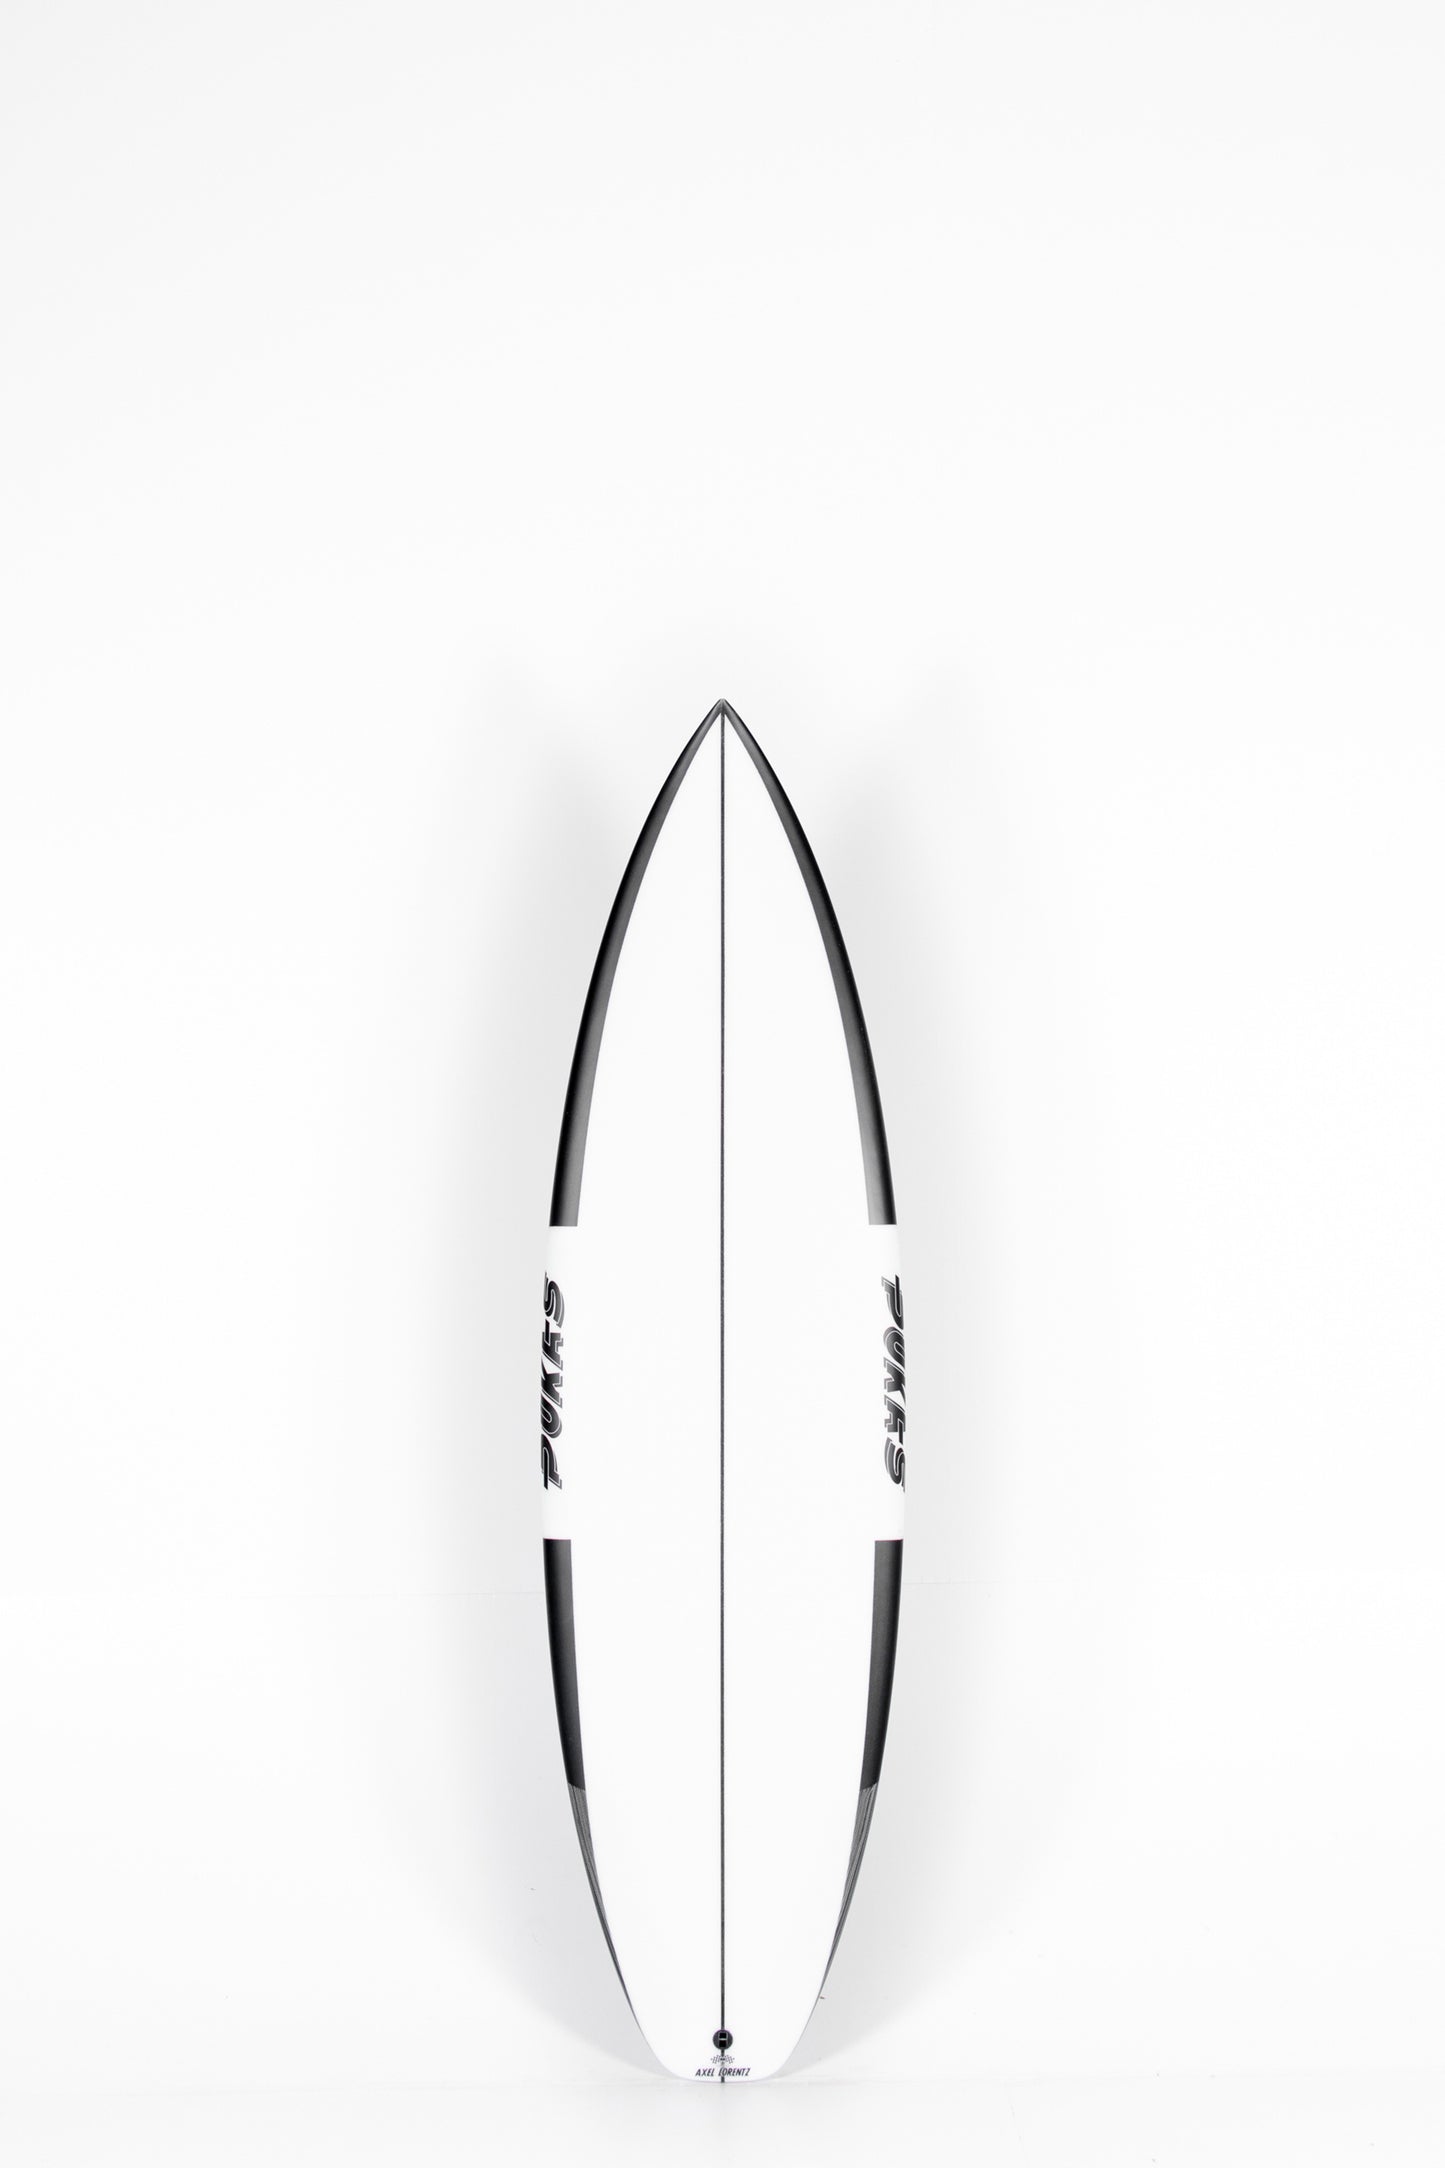 Pukas Surf Shop - Pukas Surfboard - DARKER by Axel Lorentz - 6'1" x 19,63 x 2,4 x 30,67L. - AX05973